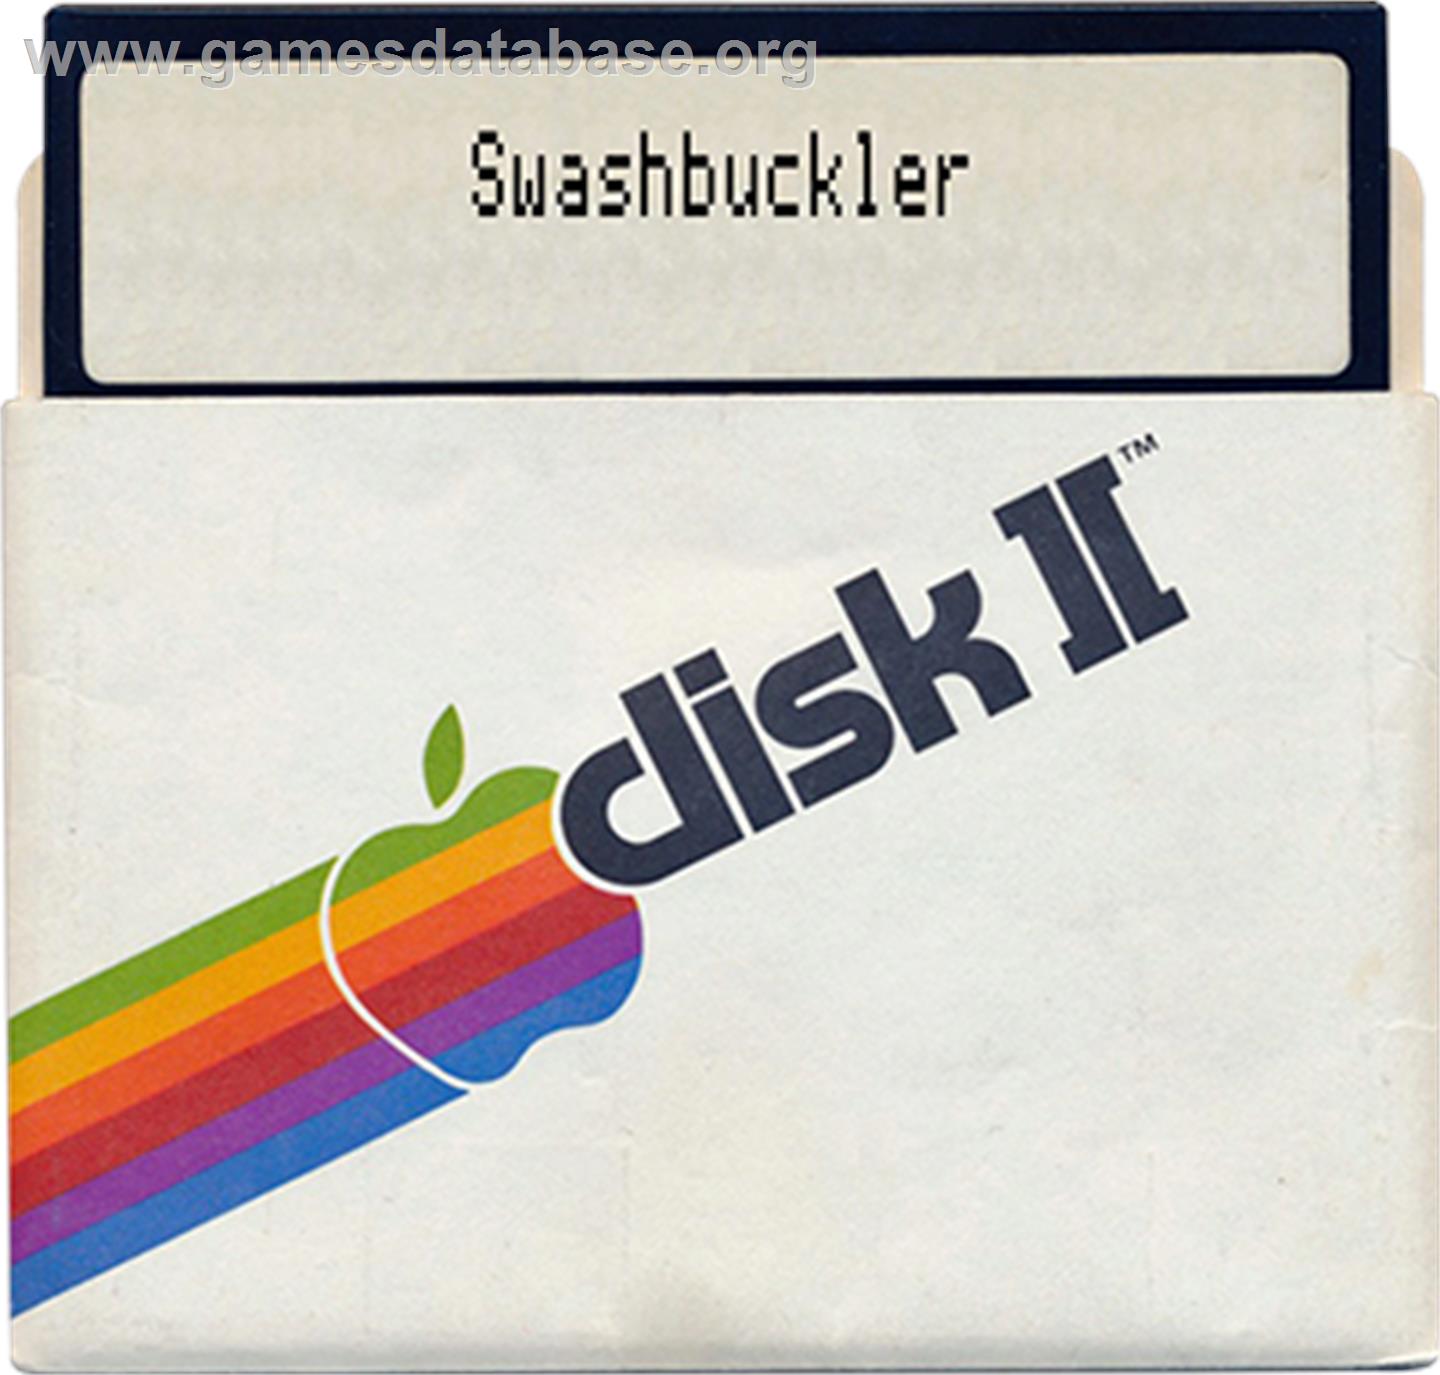 Swashbuckler - Apple II - Artwork - Disc